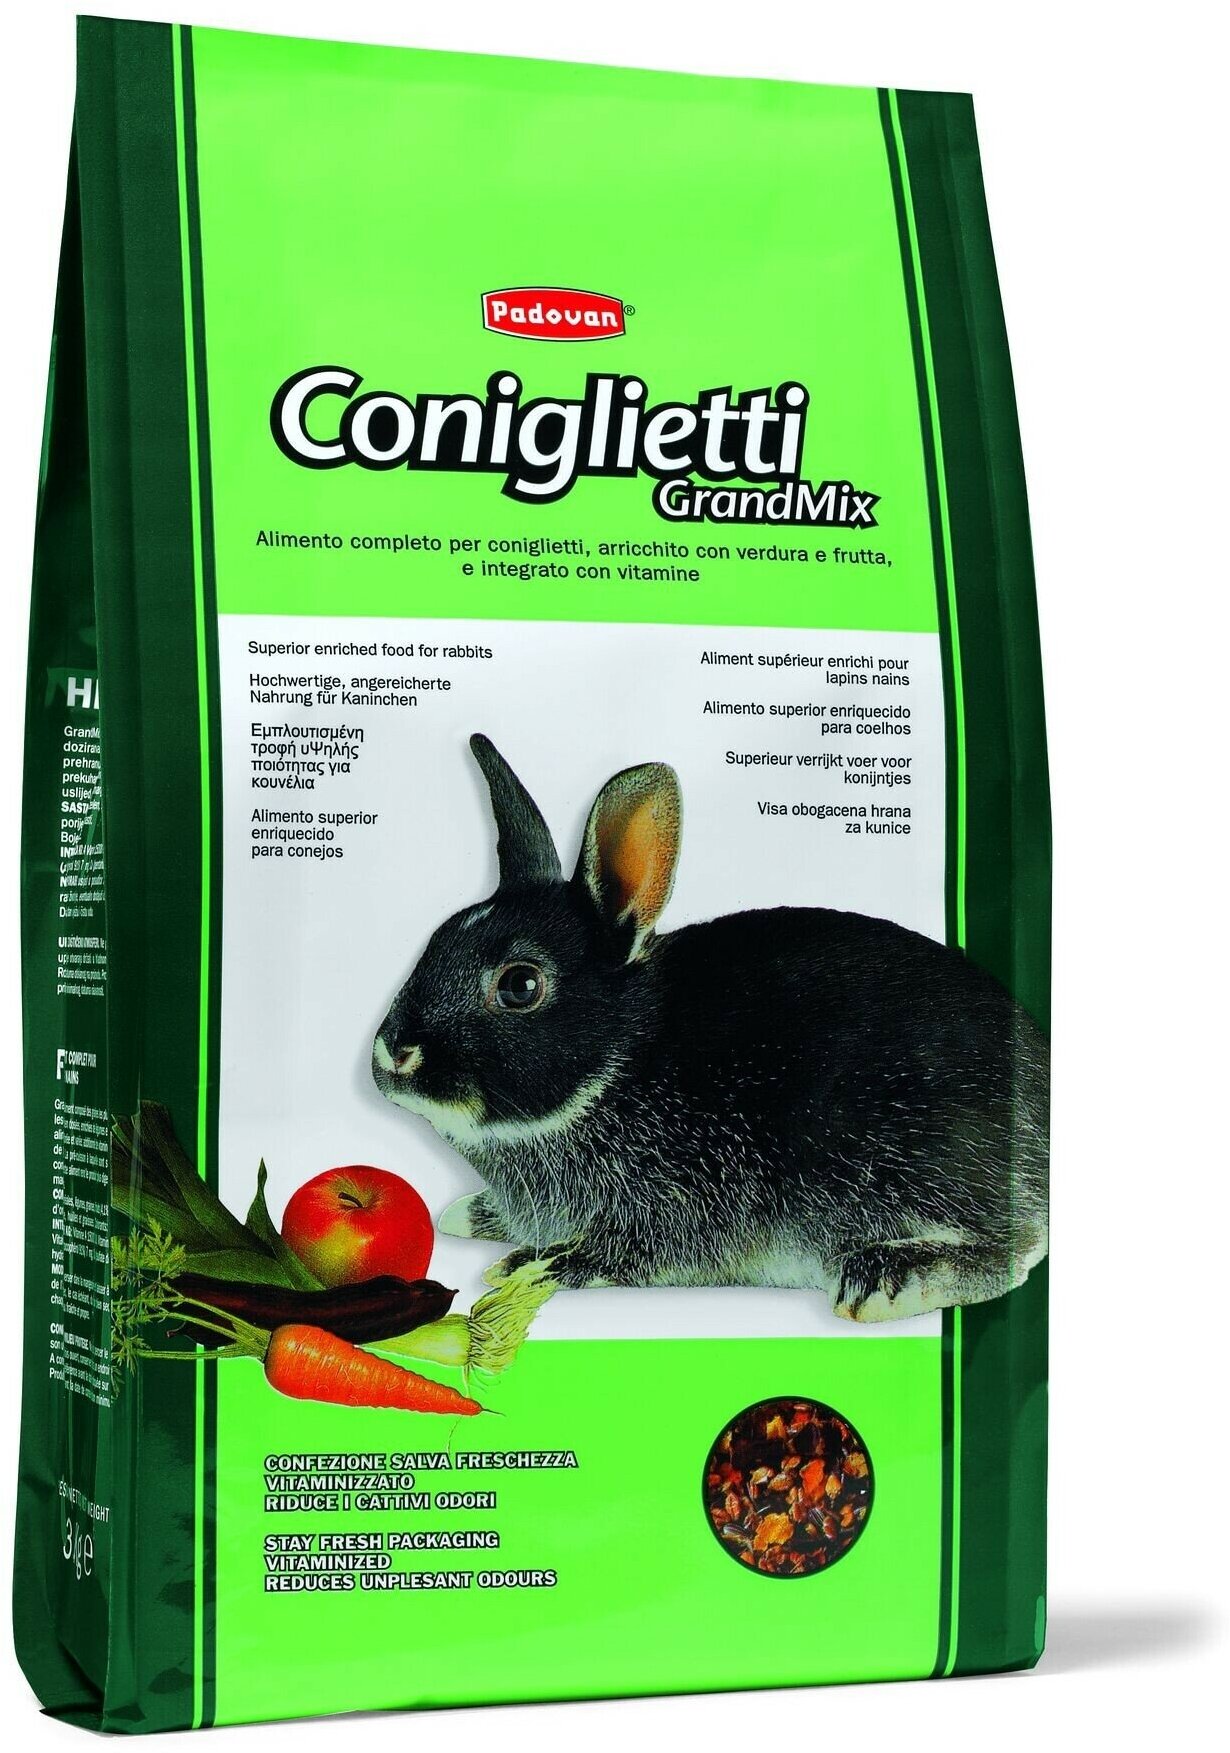 PADOVAN Grandmix Coniglietti Основной корм для Кроликов 3кг